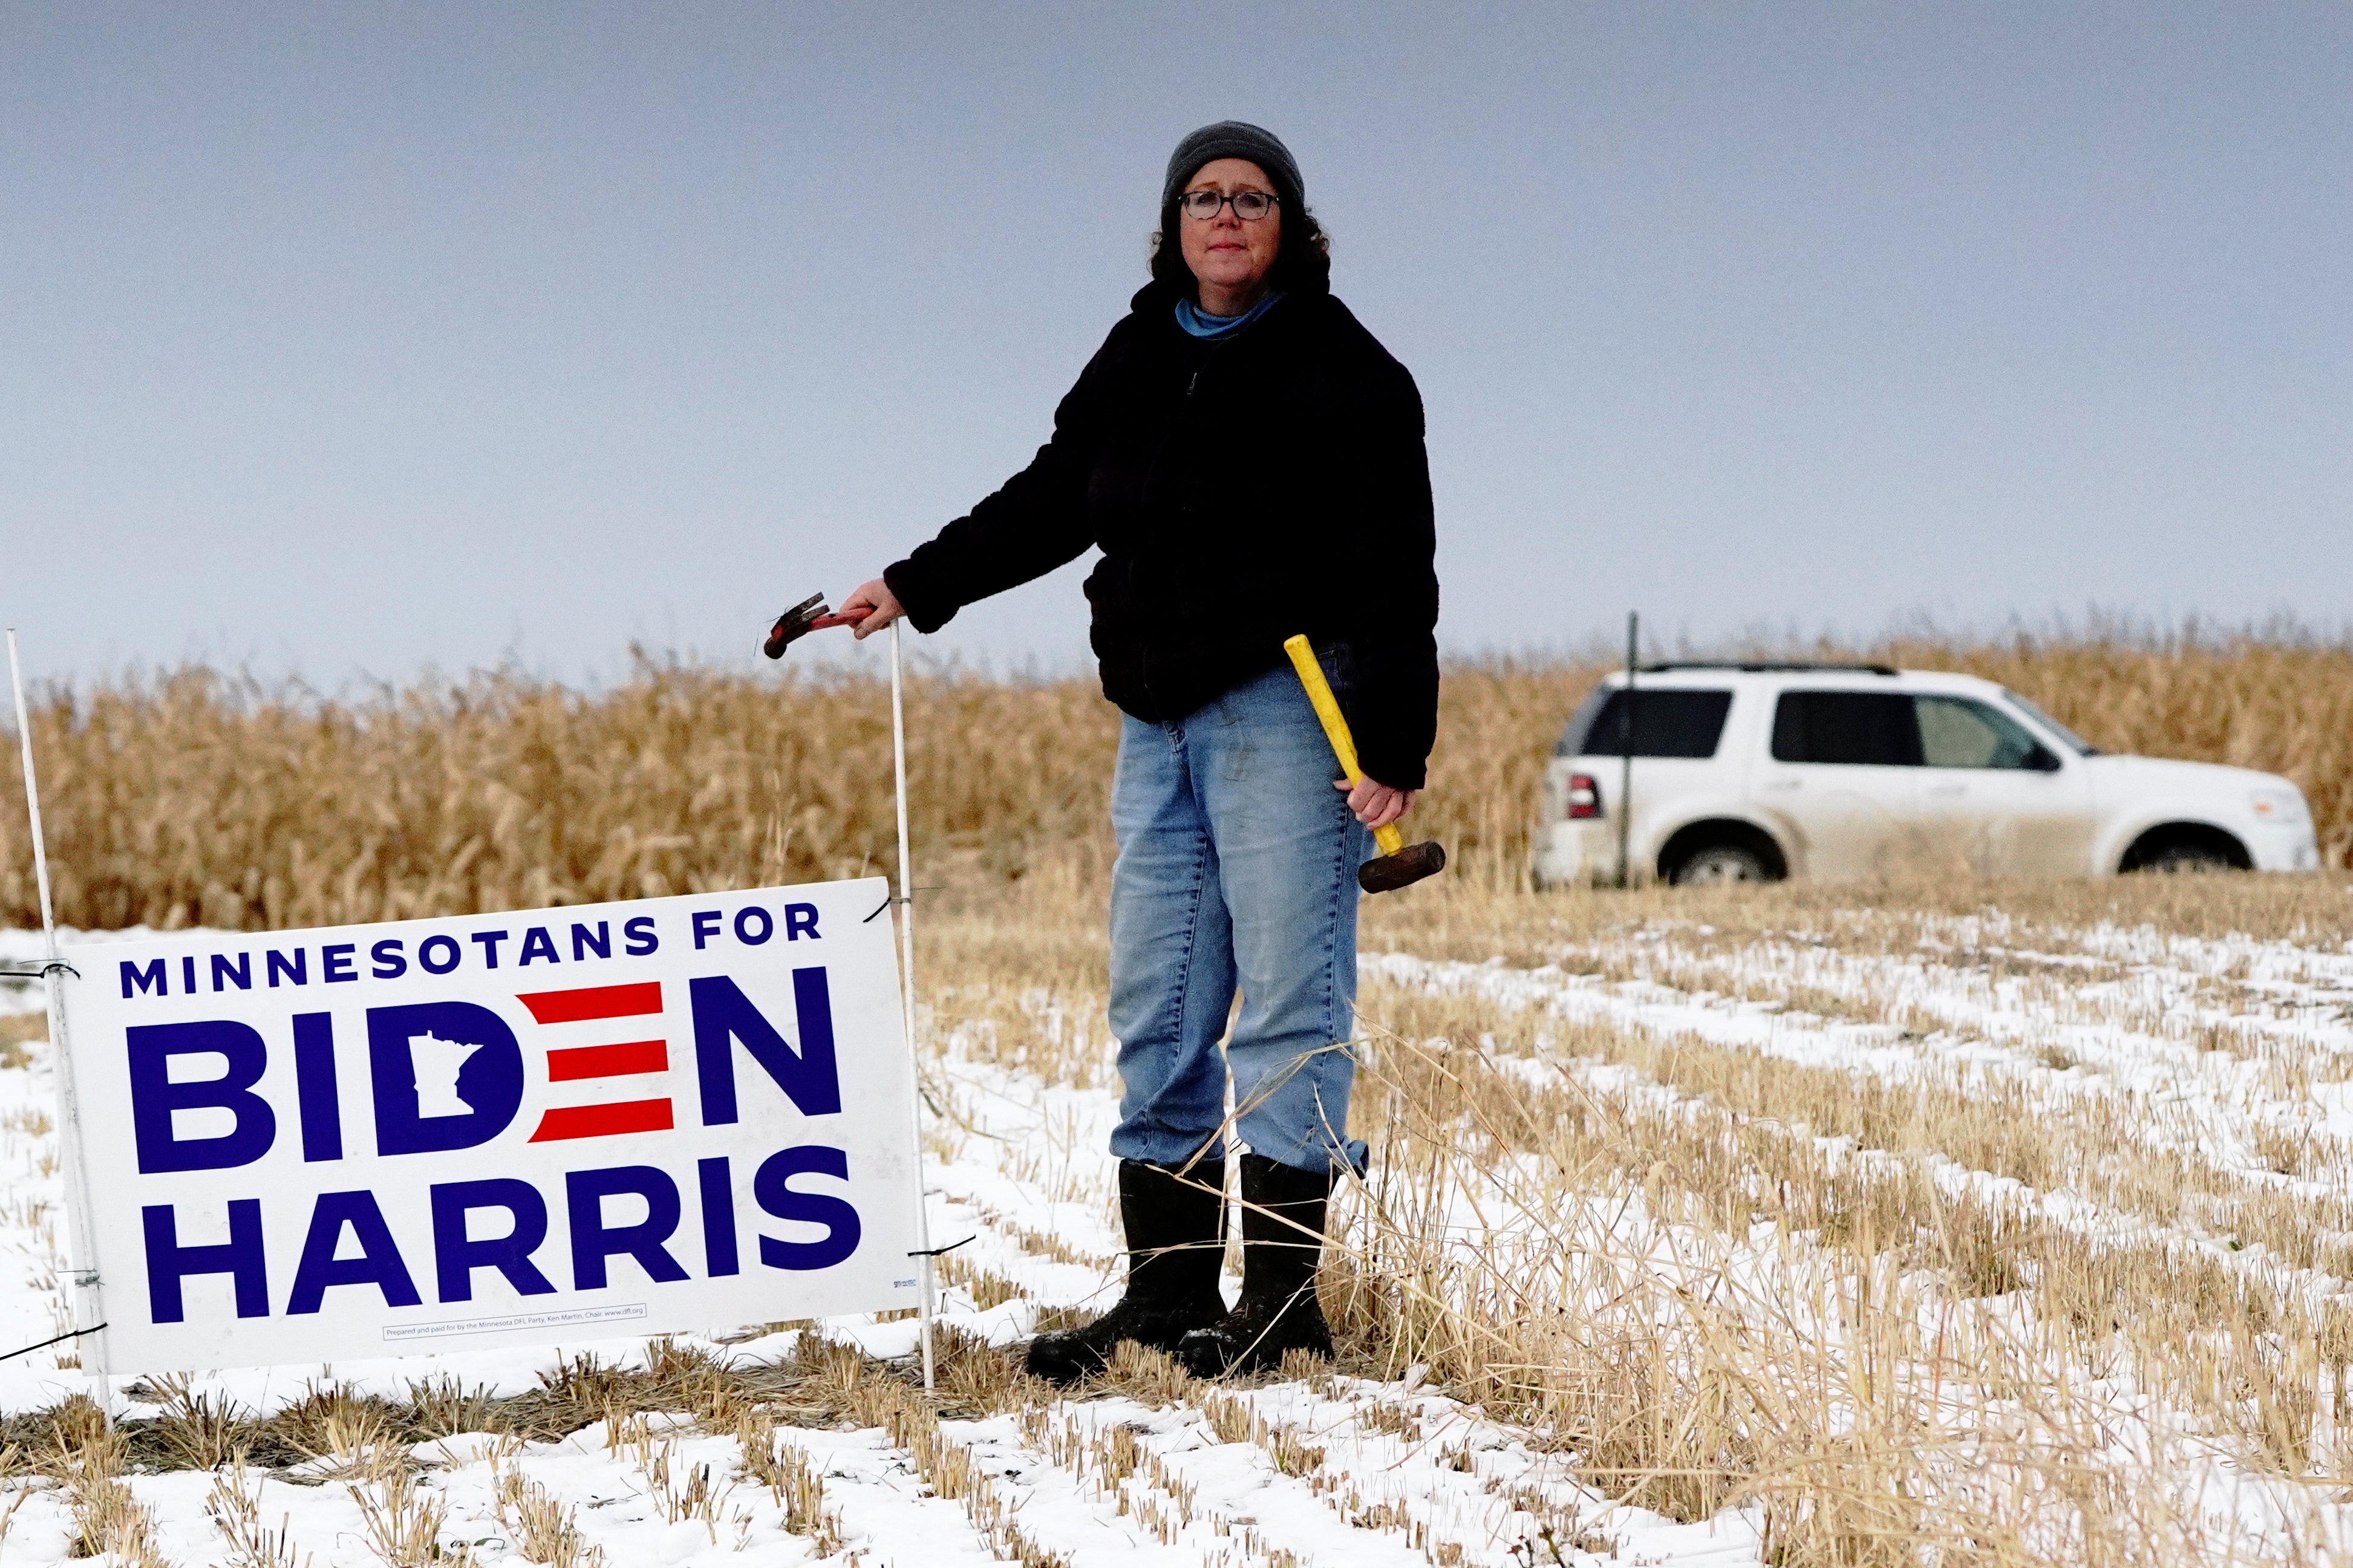 Minnesota farmer Meg Stuedemann proudly displays her politics